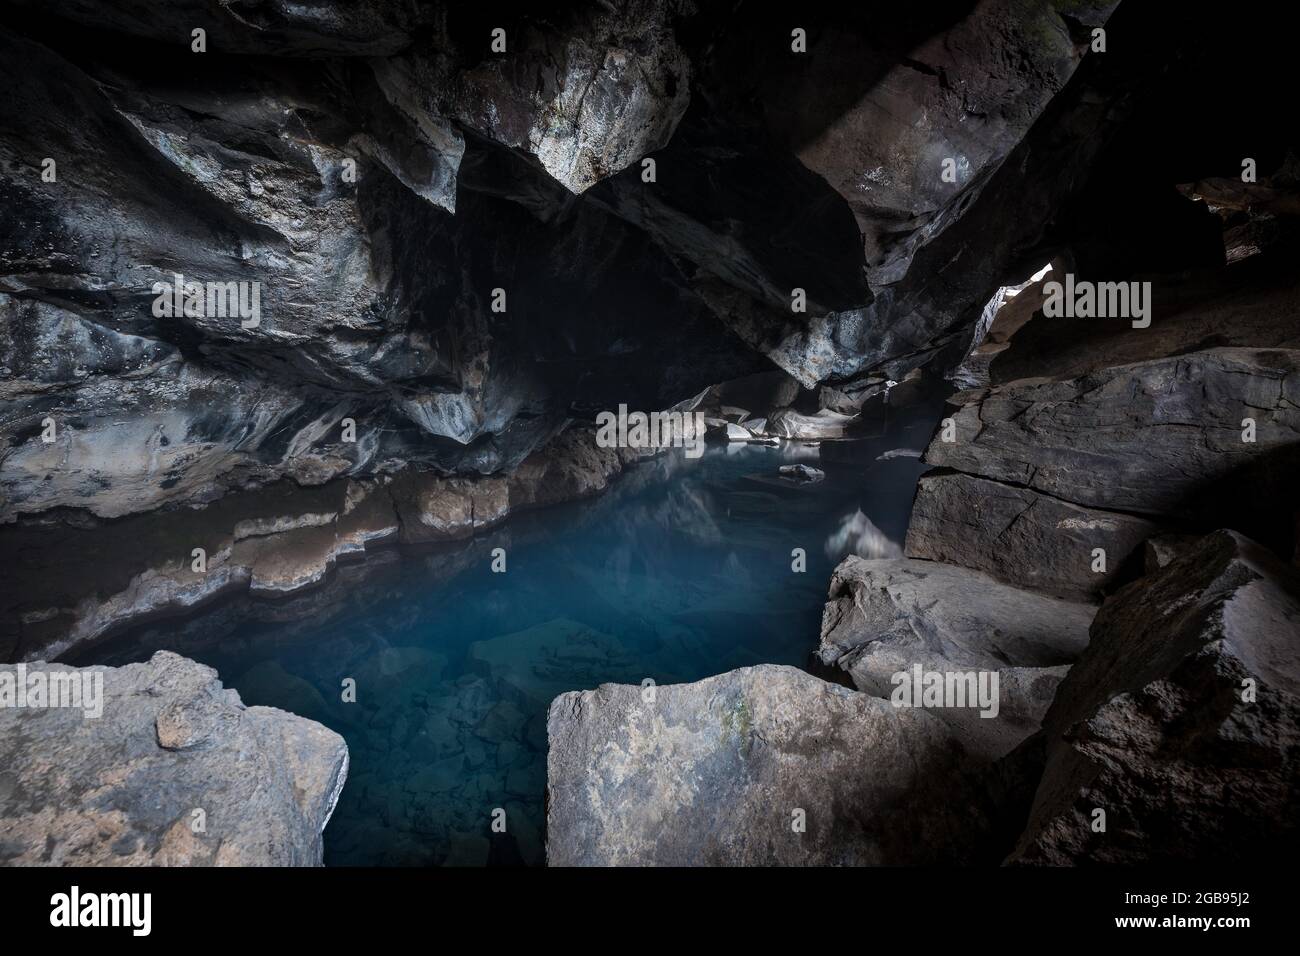 Lake, former bathing cave Grjotagja, known from Game of Thrones, near Reykjahlio, Myvatn or Myvatn, Krafla volcano system, Northern Iceland Stock Photo